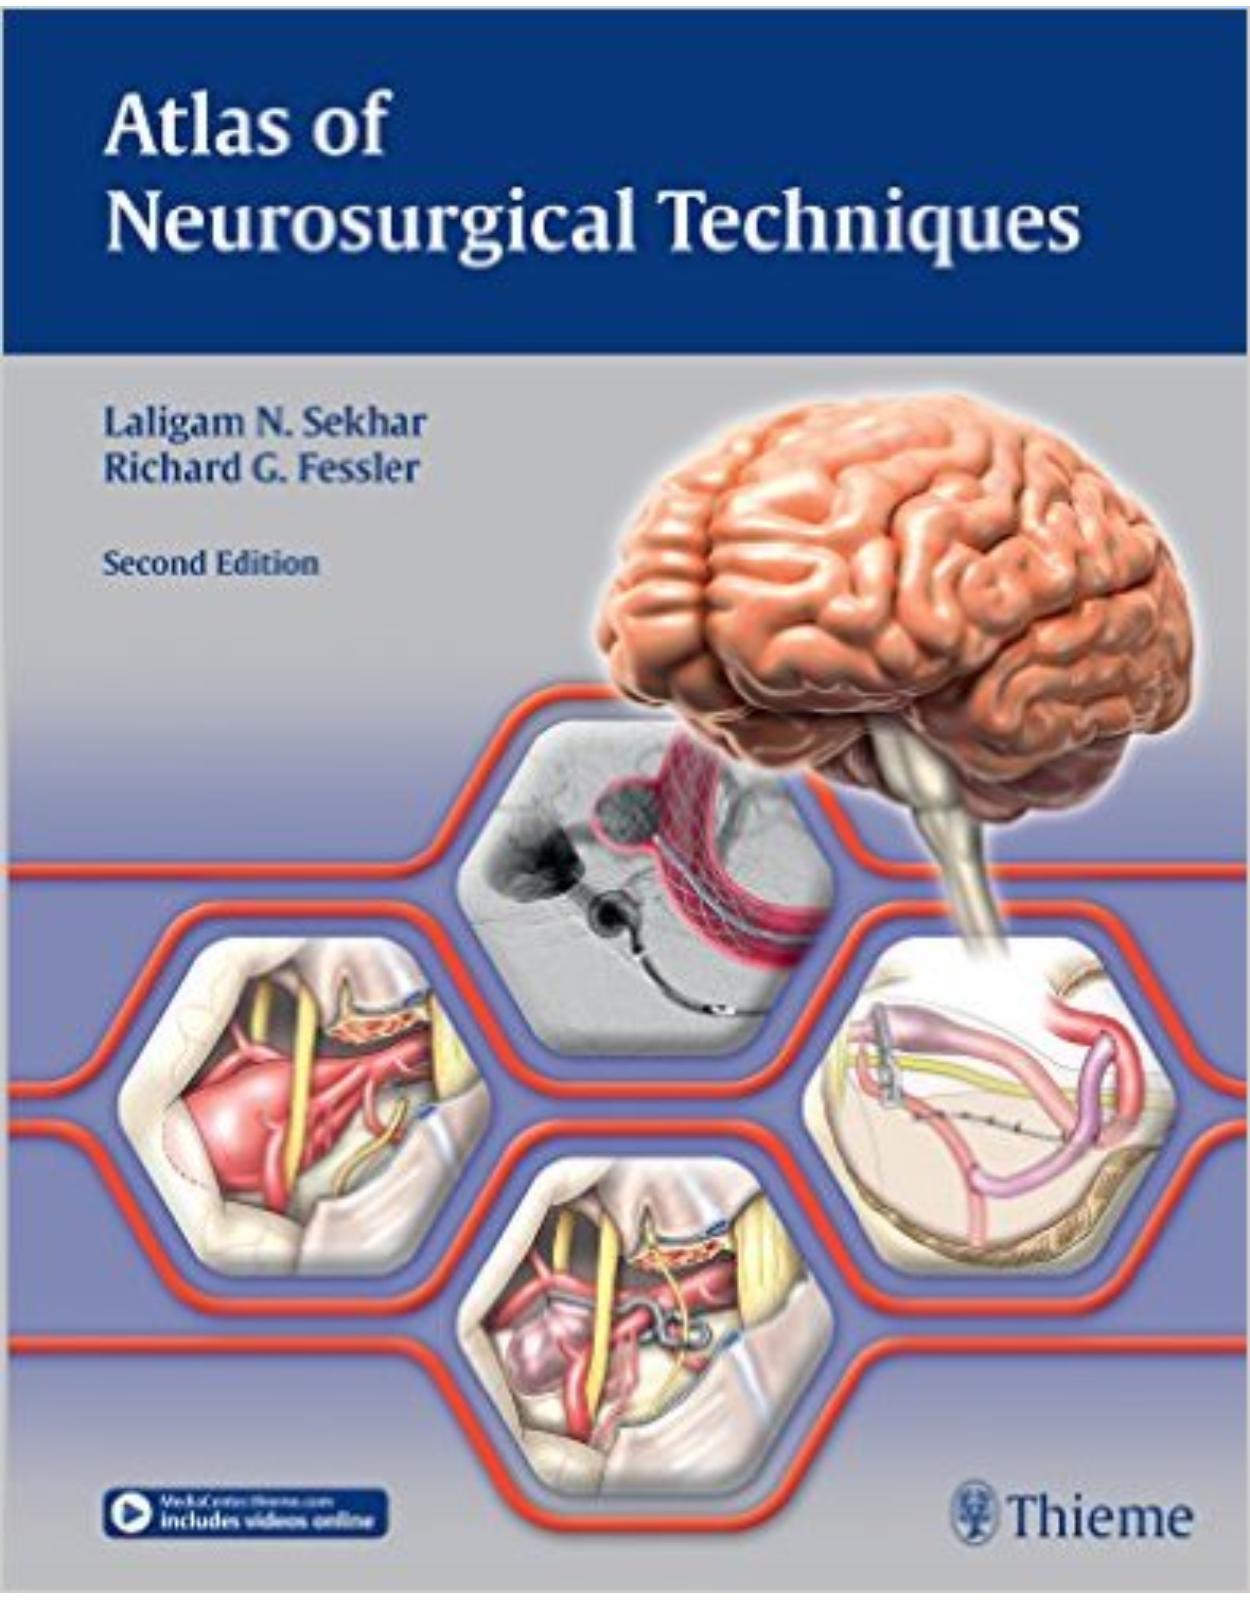 Atlas of Neurosurgical Techniques.Brain.